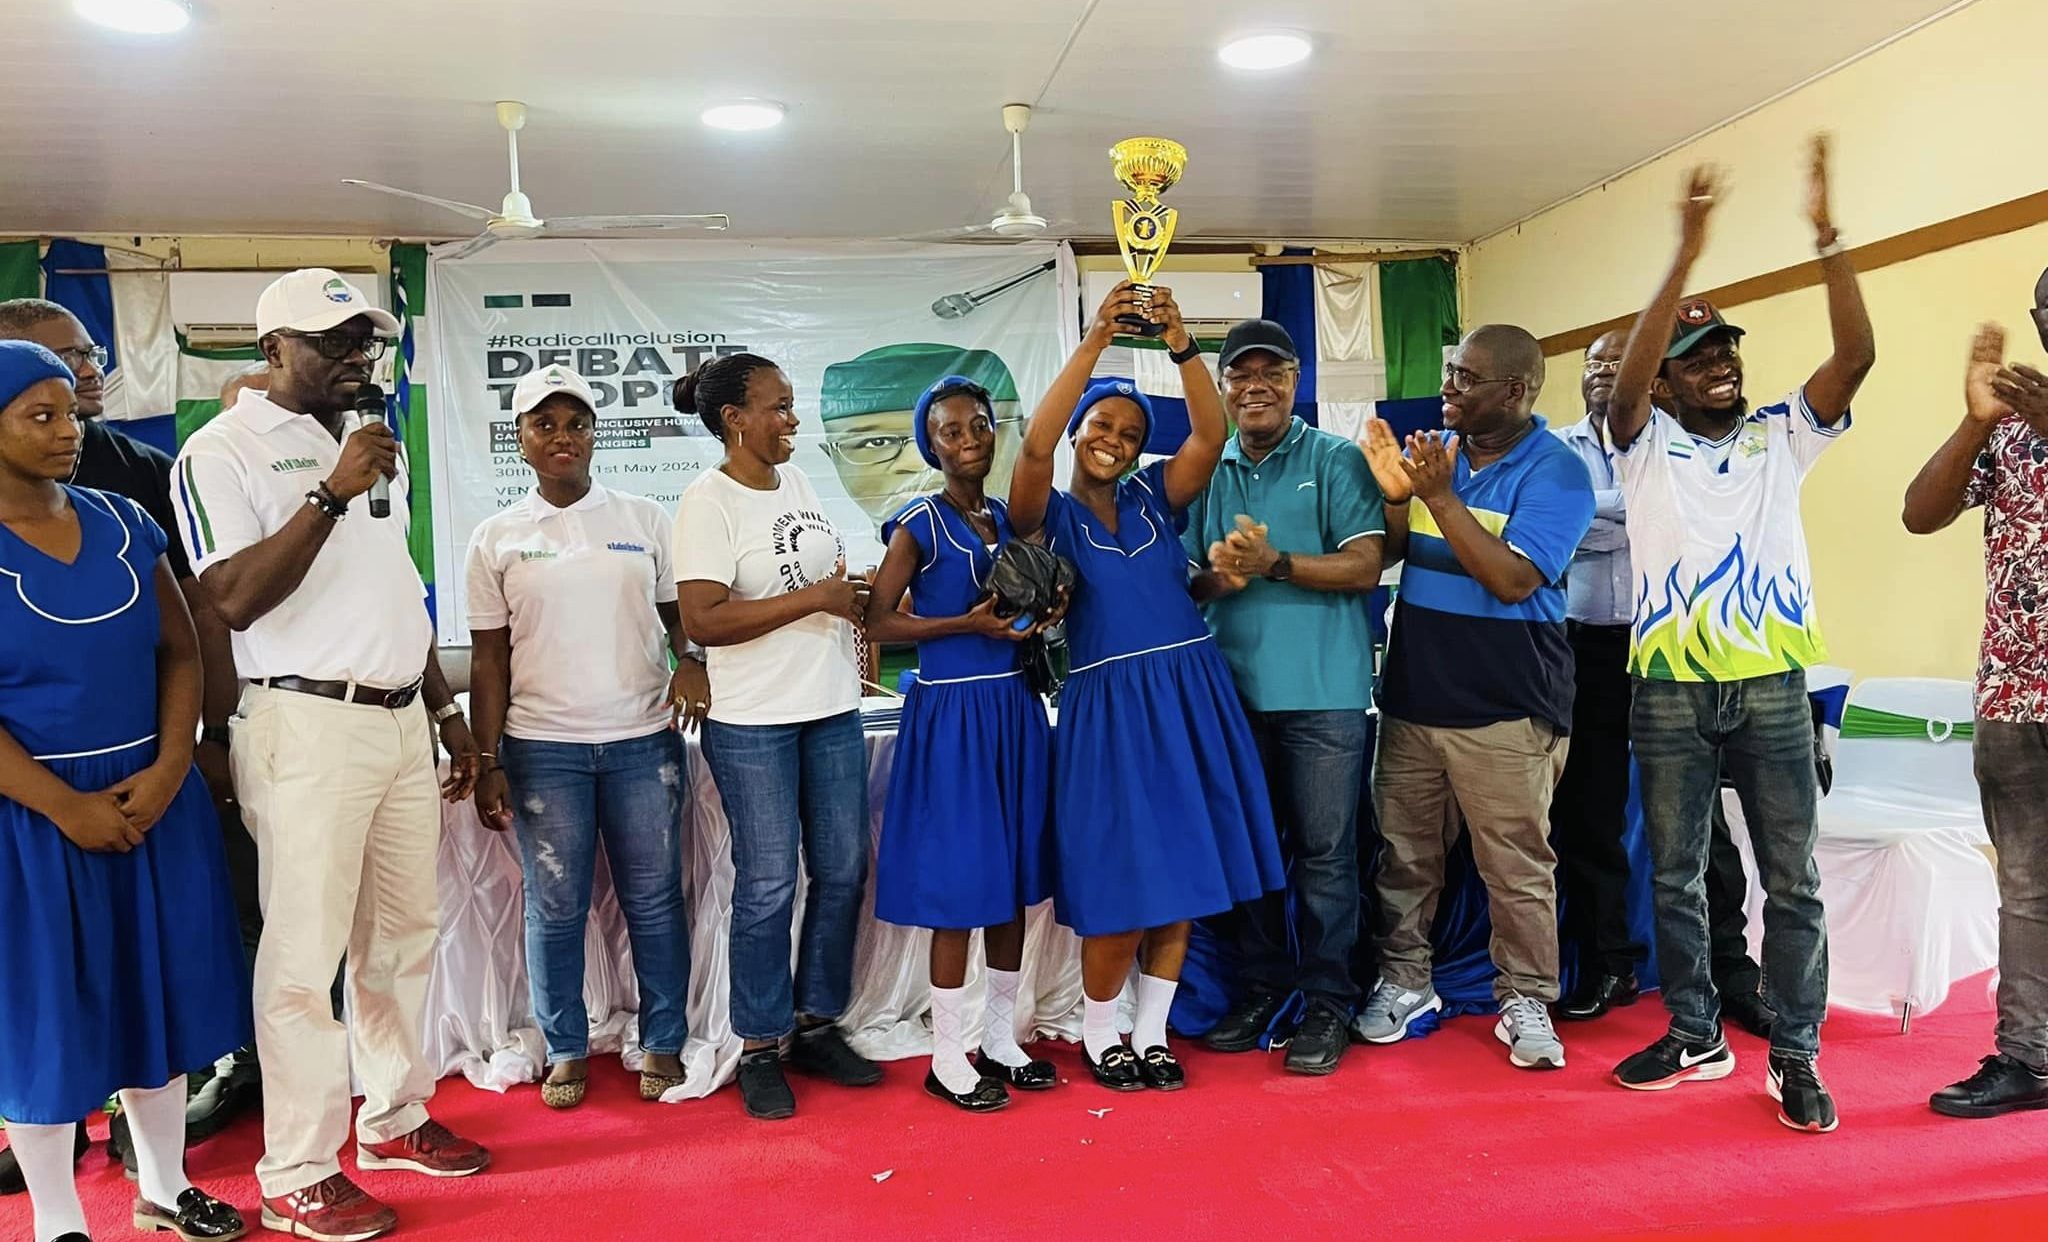 Harford School For Girls Wins Debate on Radical Inclusion in Moyamba